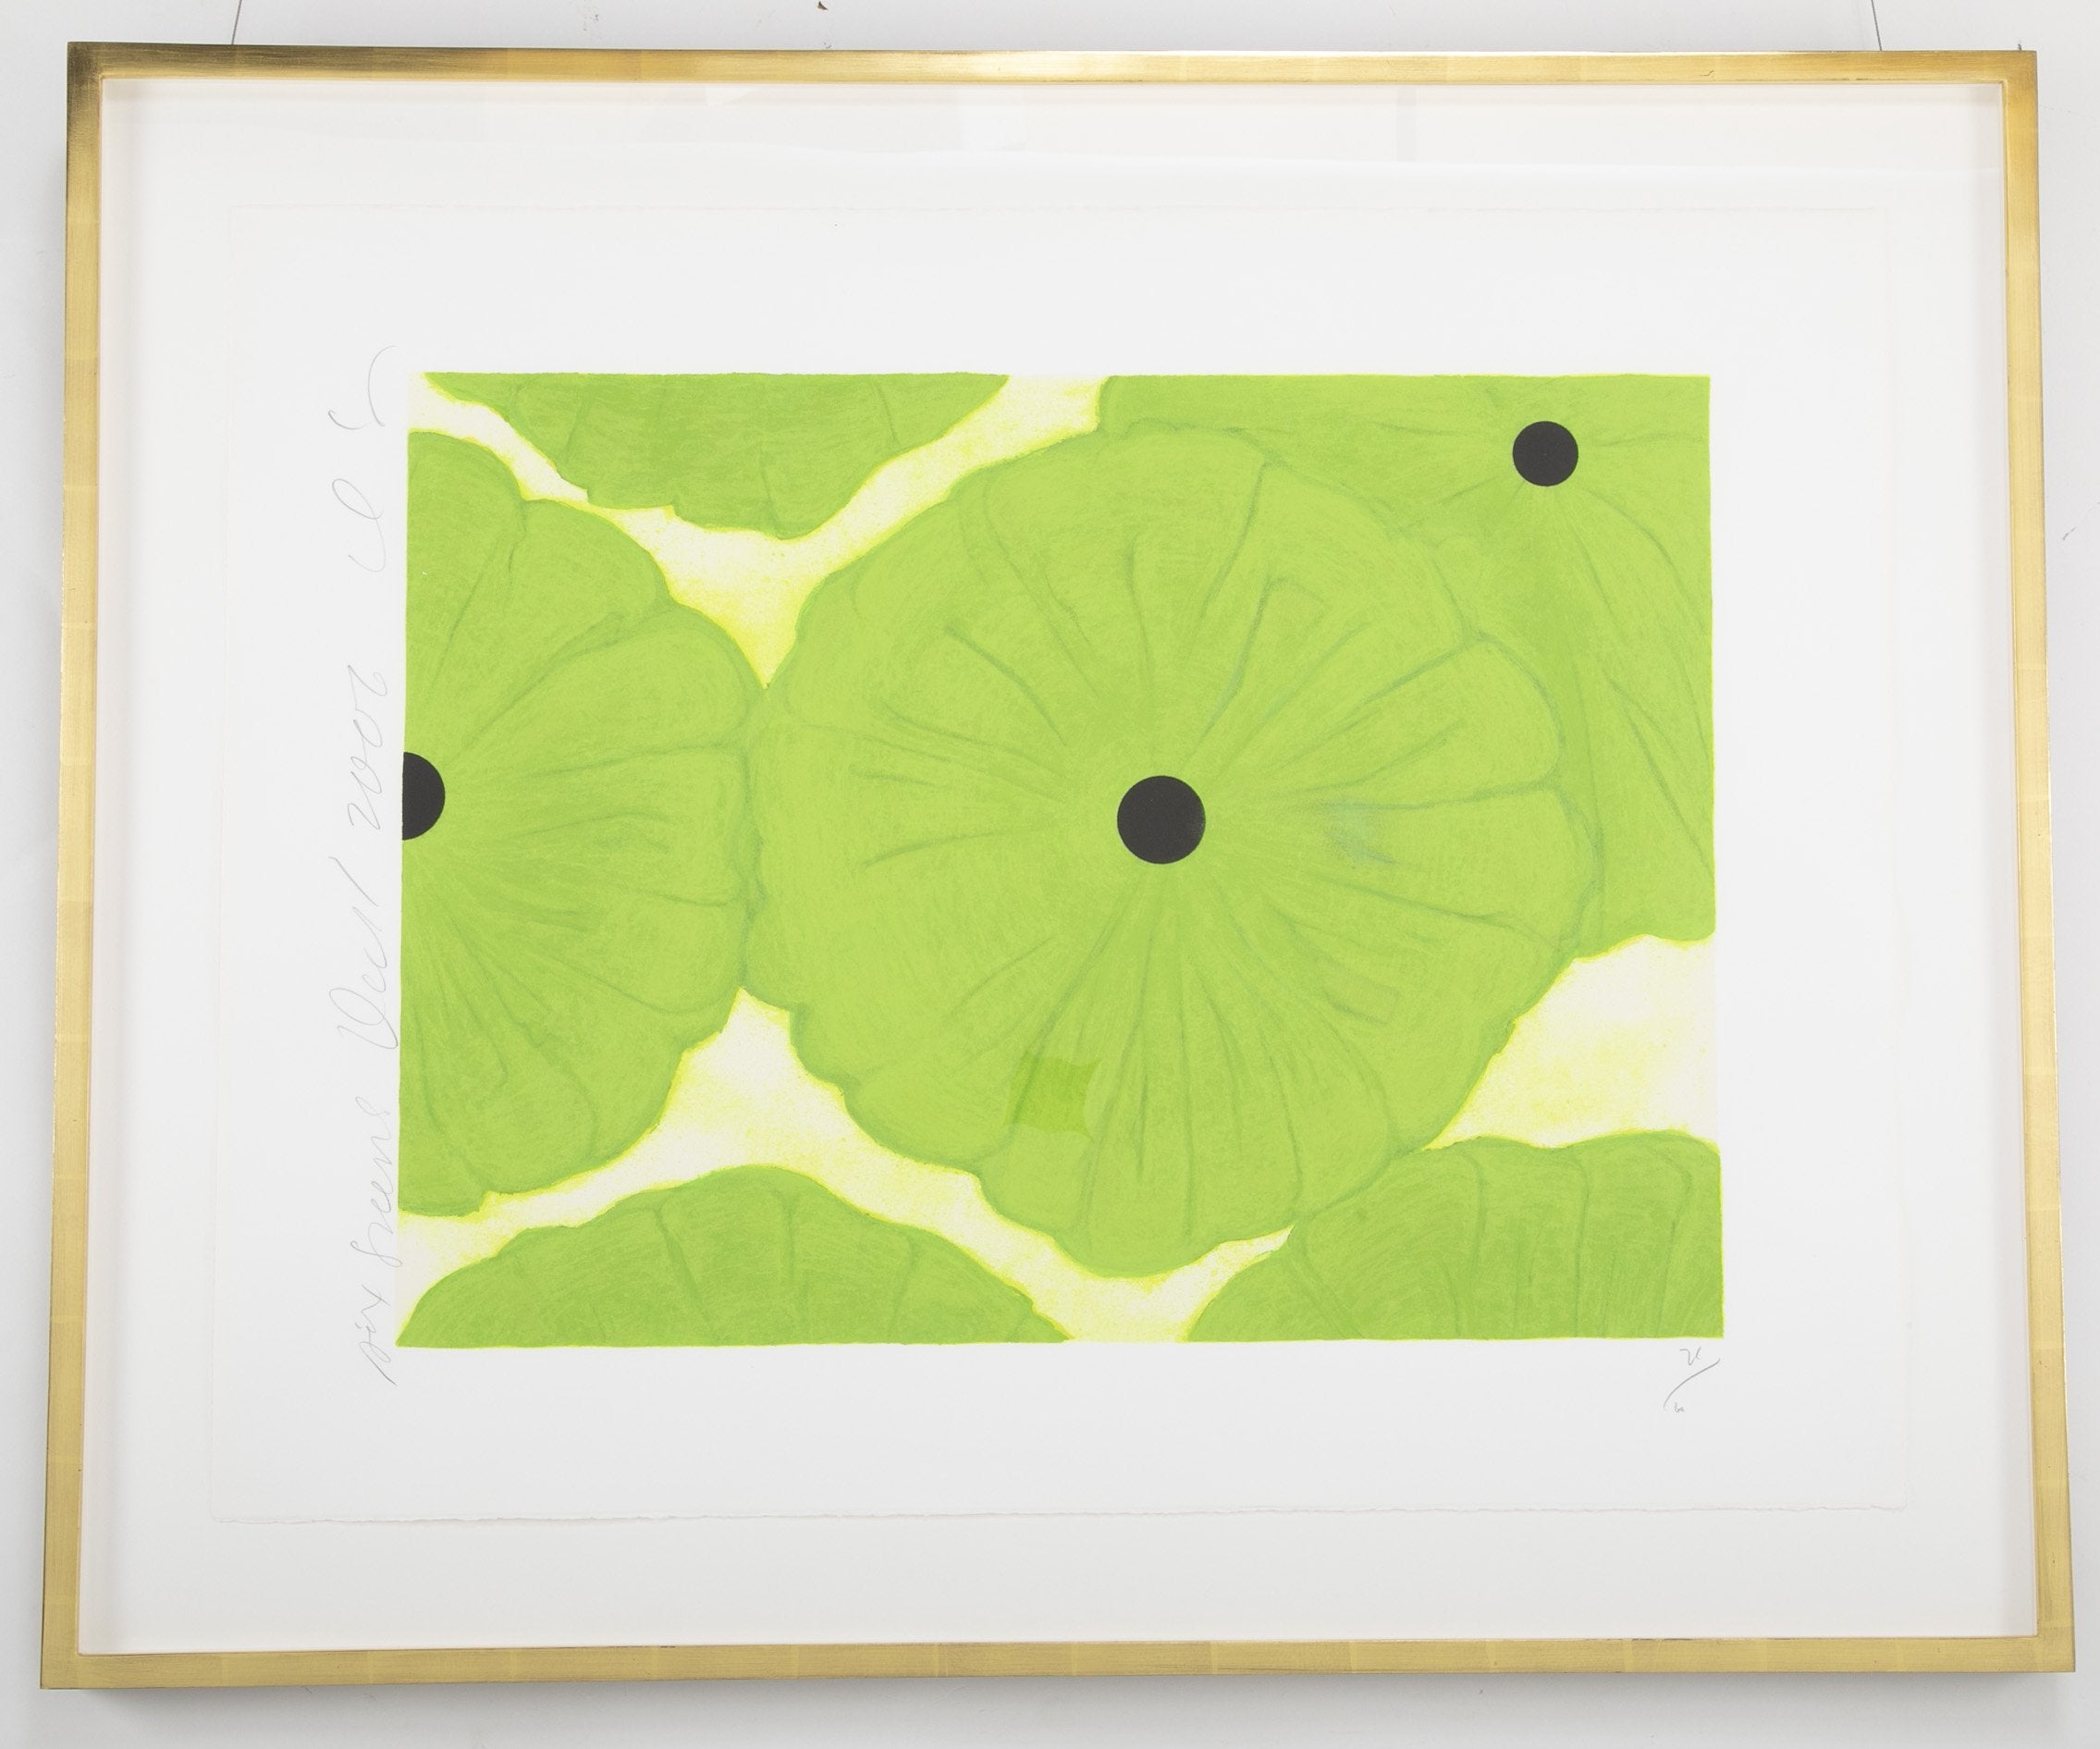 Donald Sultan, "Six Greens" Screen Print